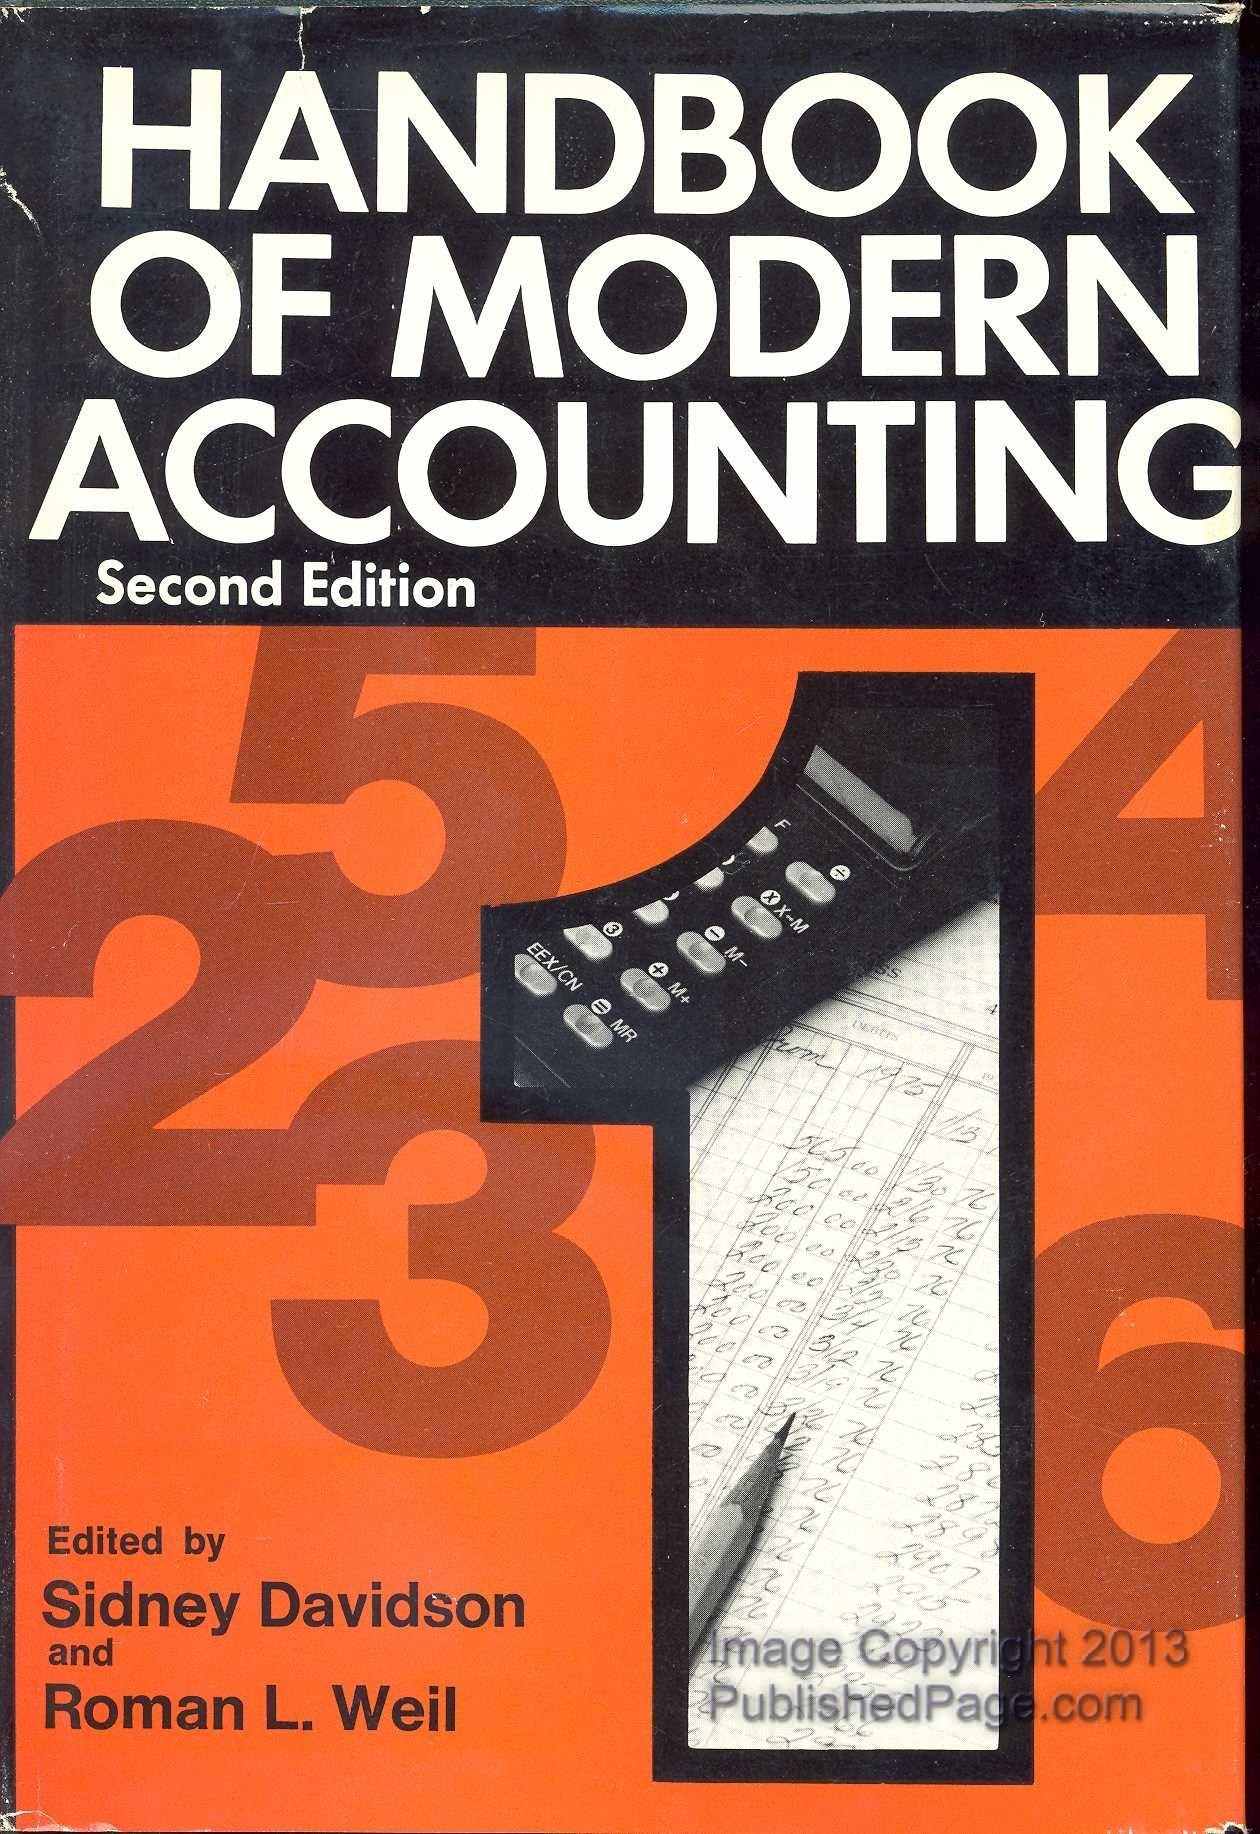 handbook of modern accounting 2nd edition sidney davidson, roman l weil 0070154511, 978-0070154513